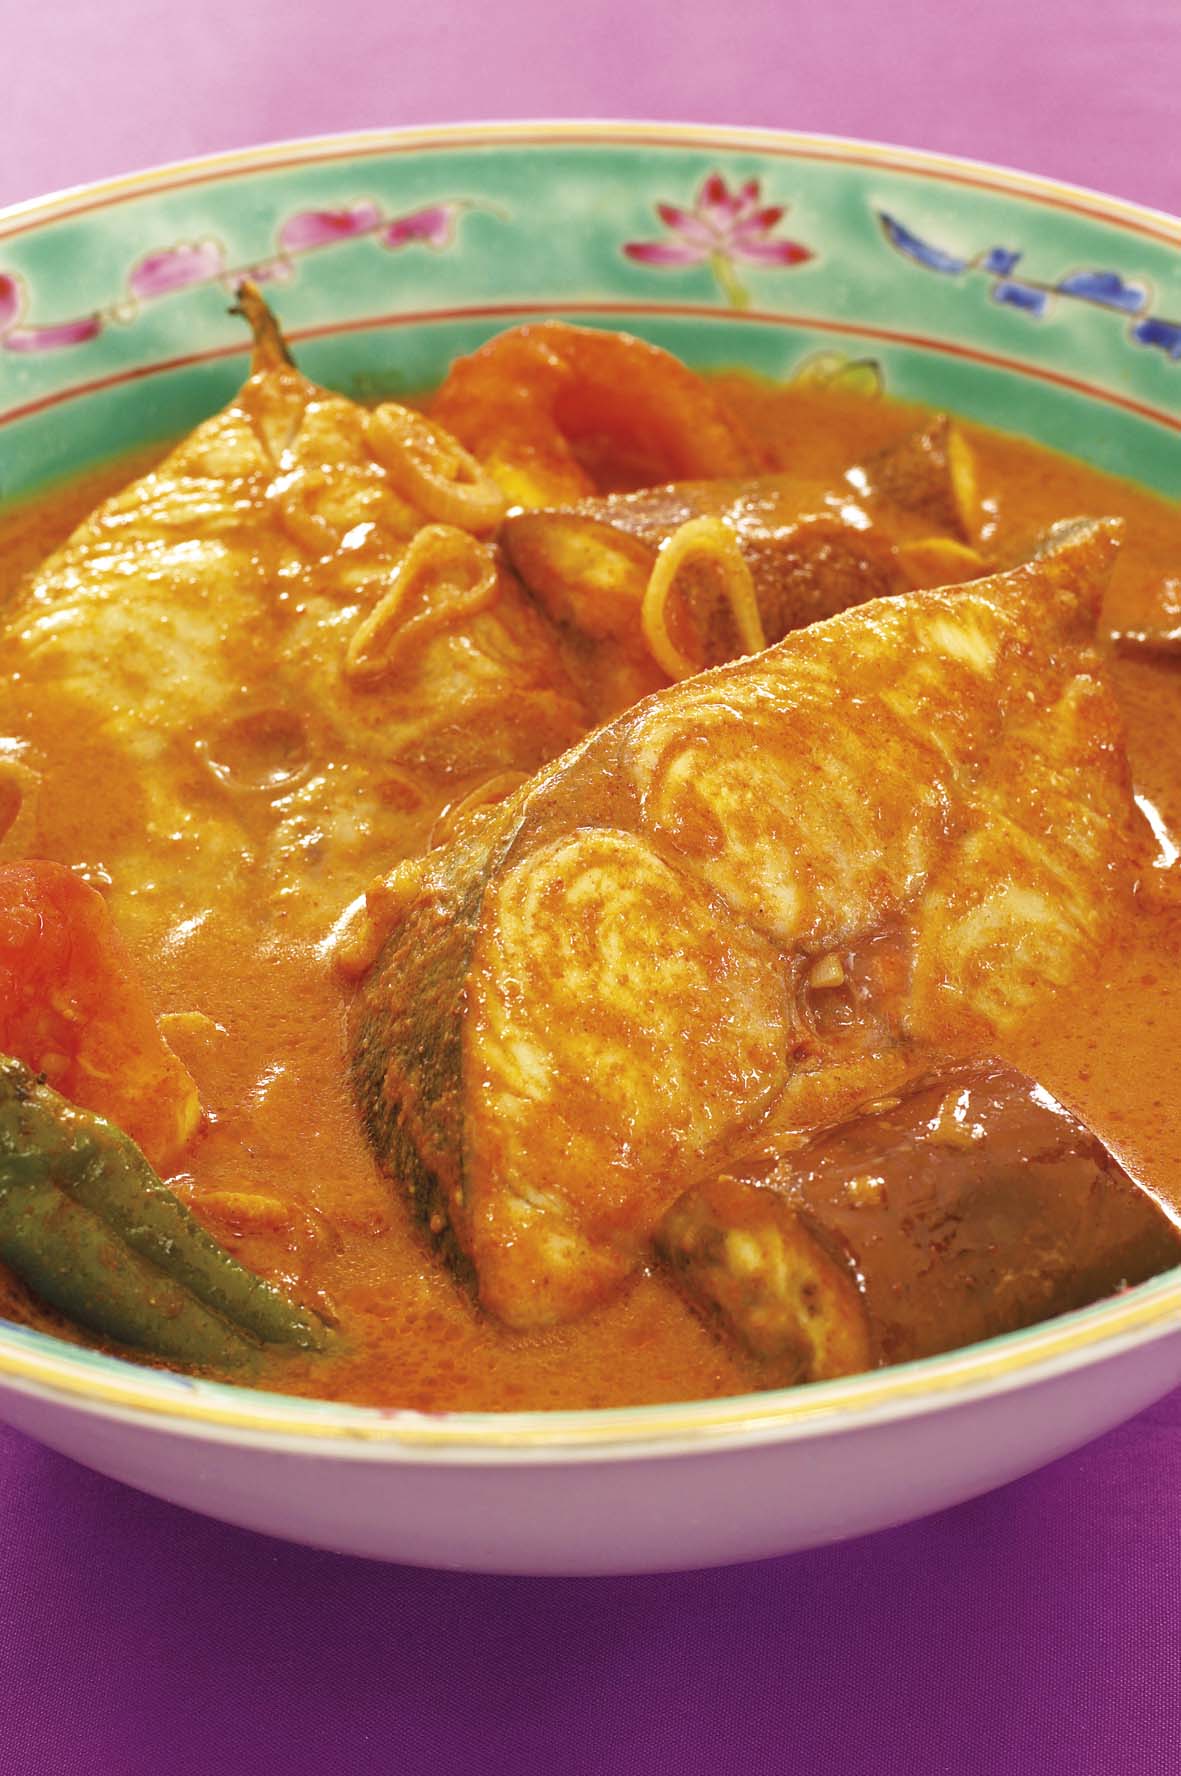 Nonya Curry Powder